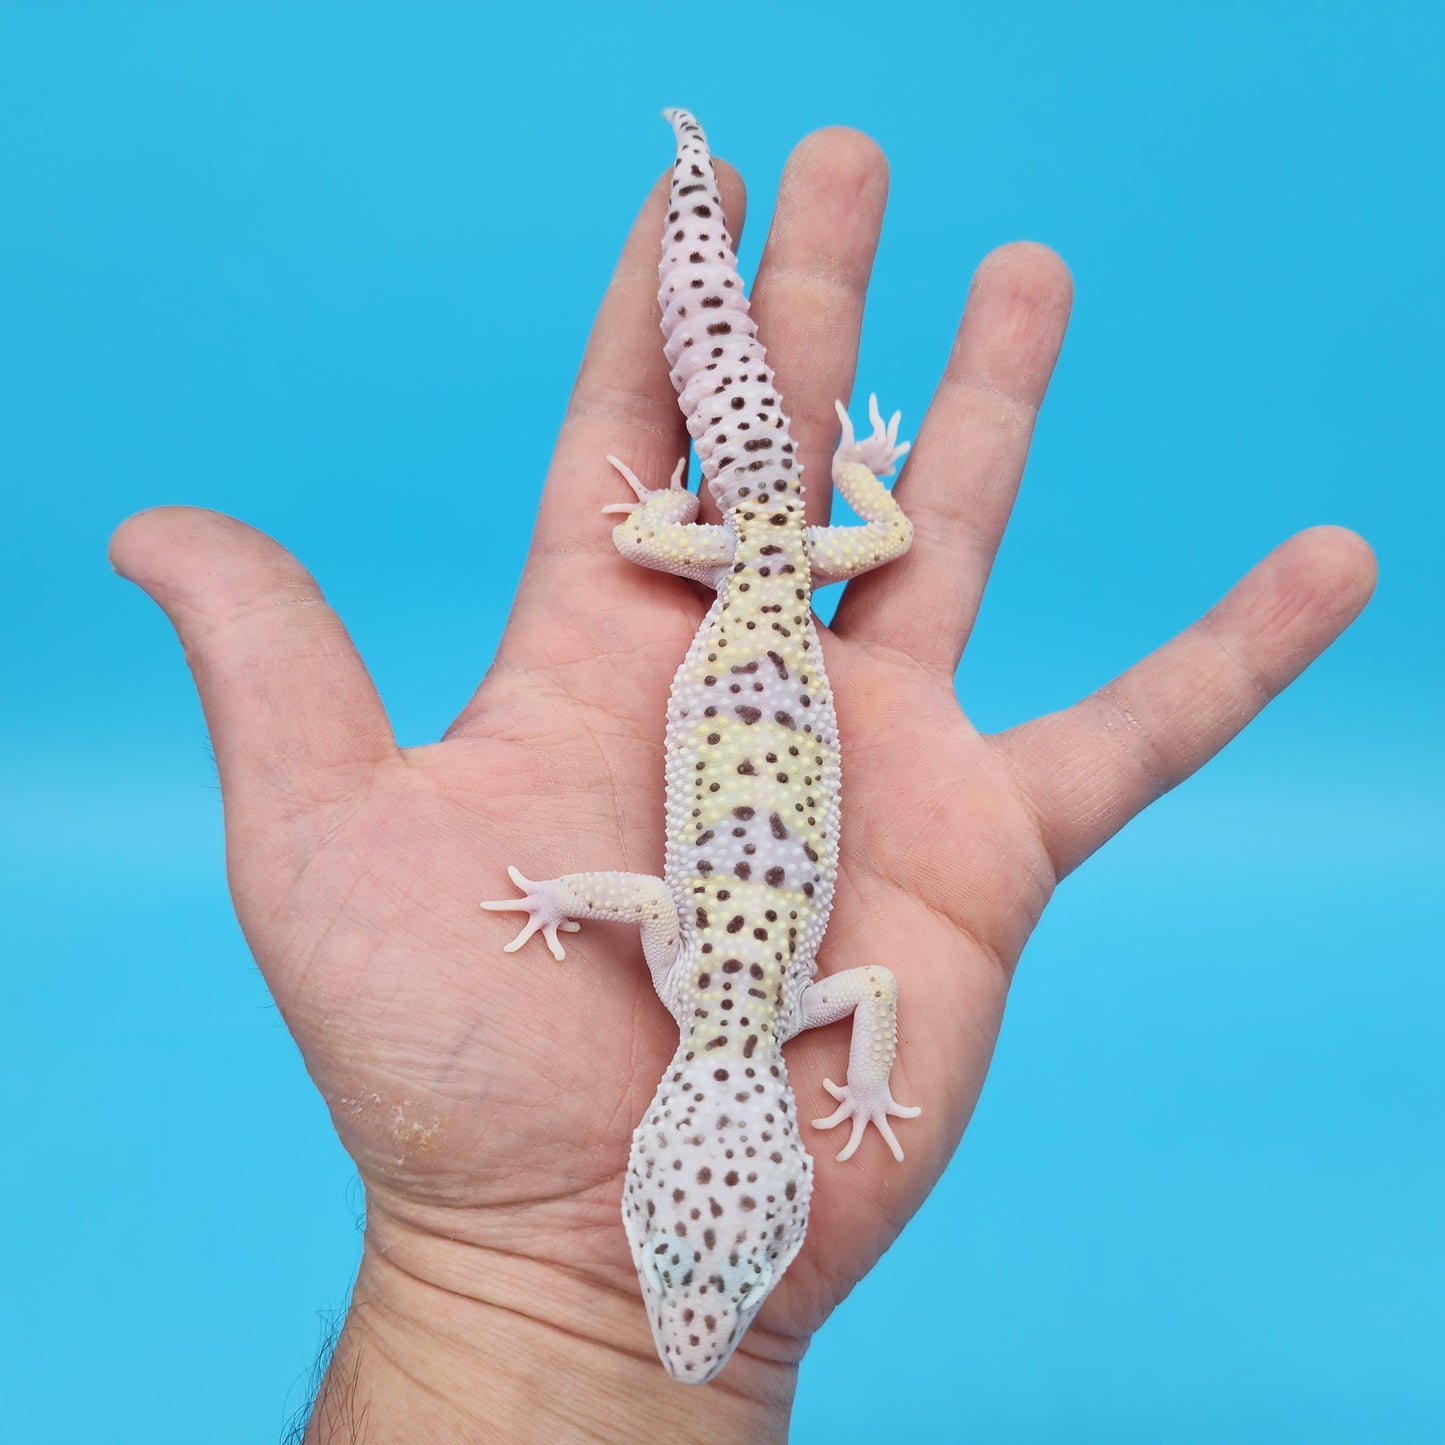 Male Pure Fasciolatus (High Lavender Reduced Pattern Phase) Leopard Gecko